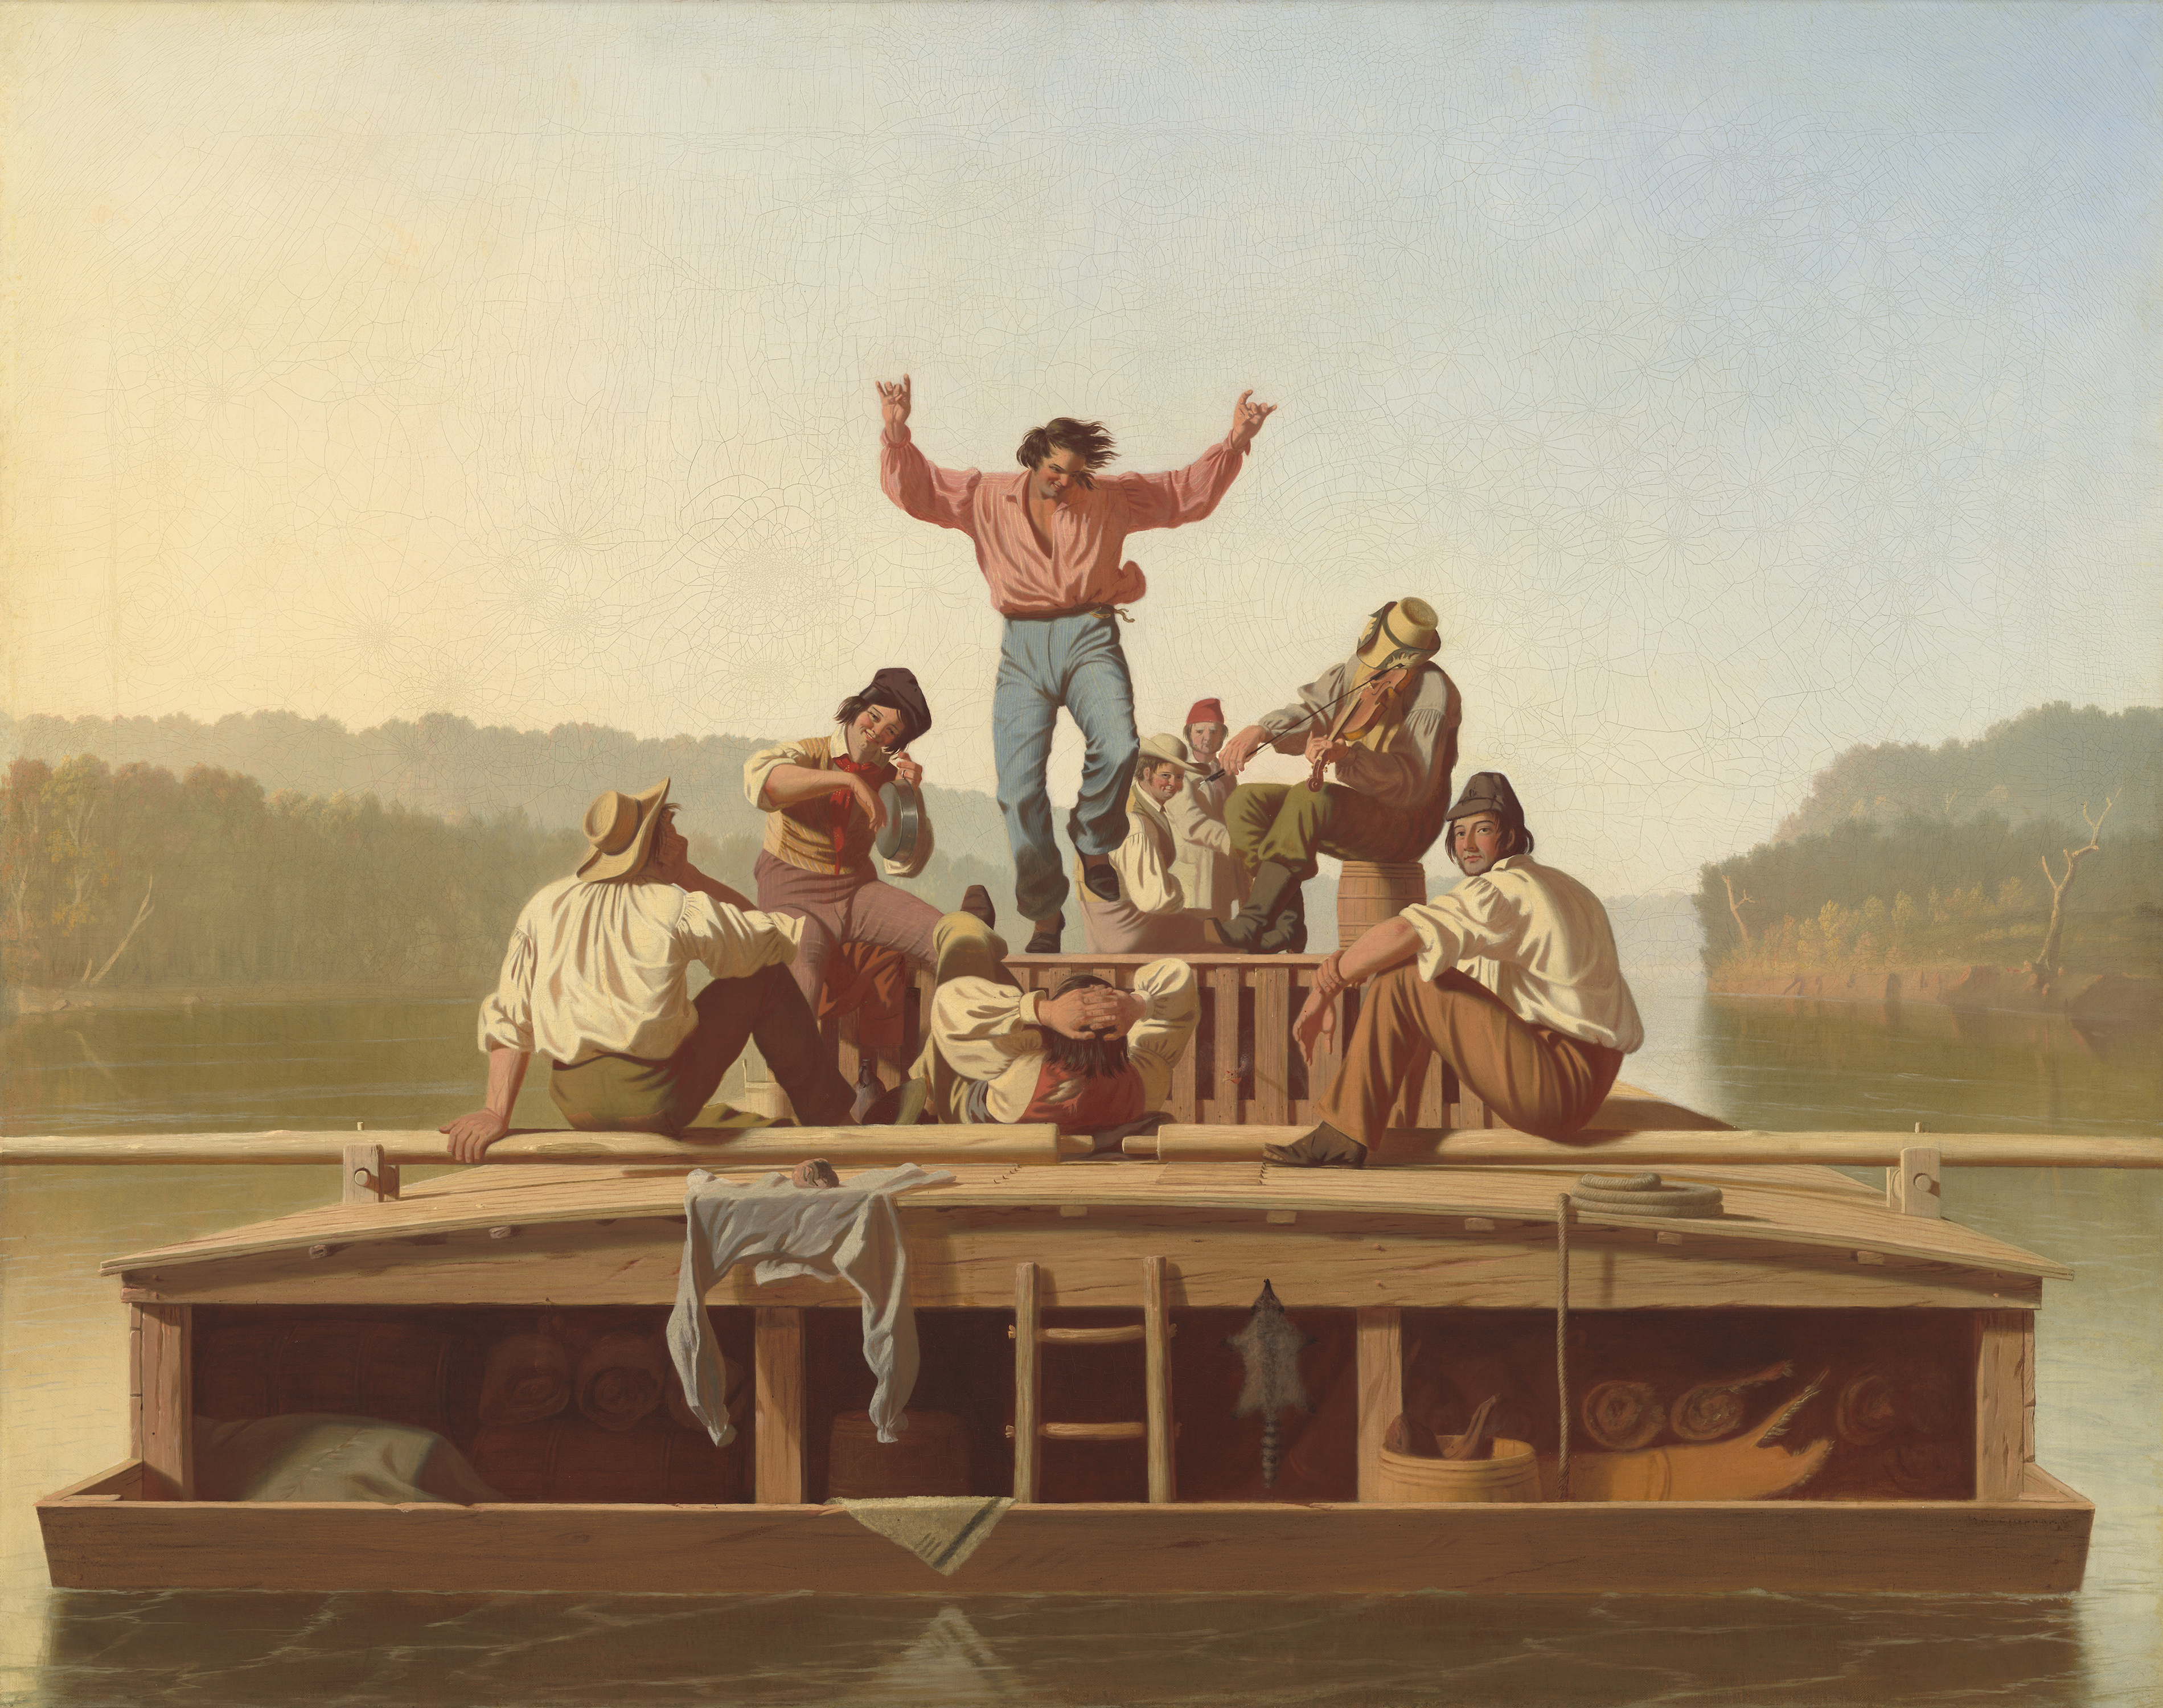 Veselí muži na pramici by George Caleb Bingham - 1846 